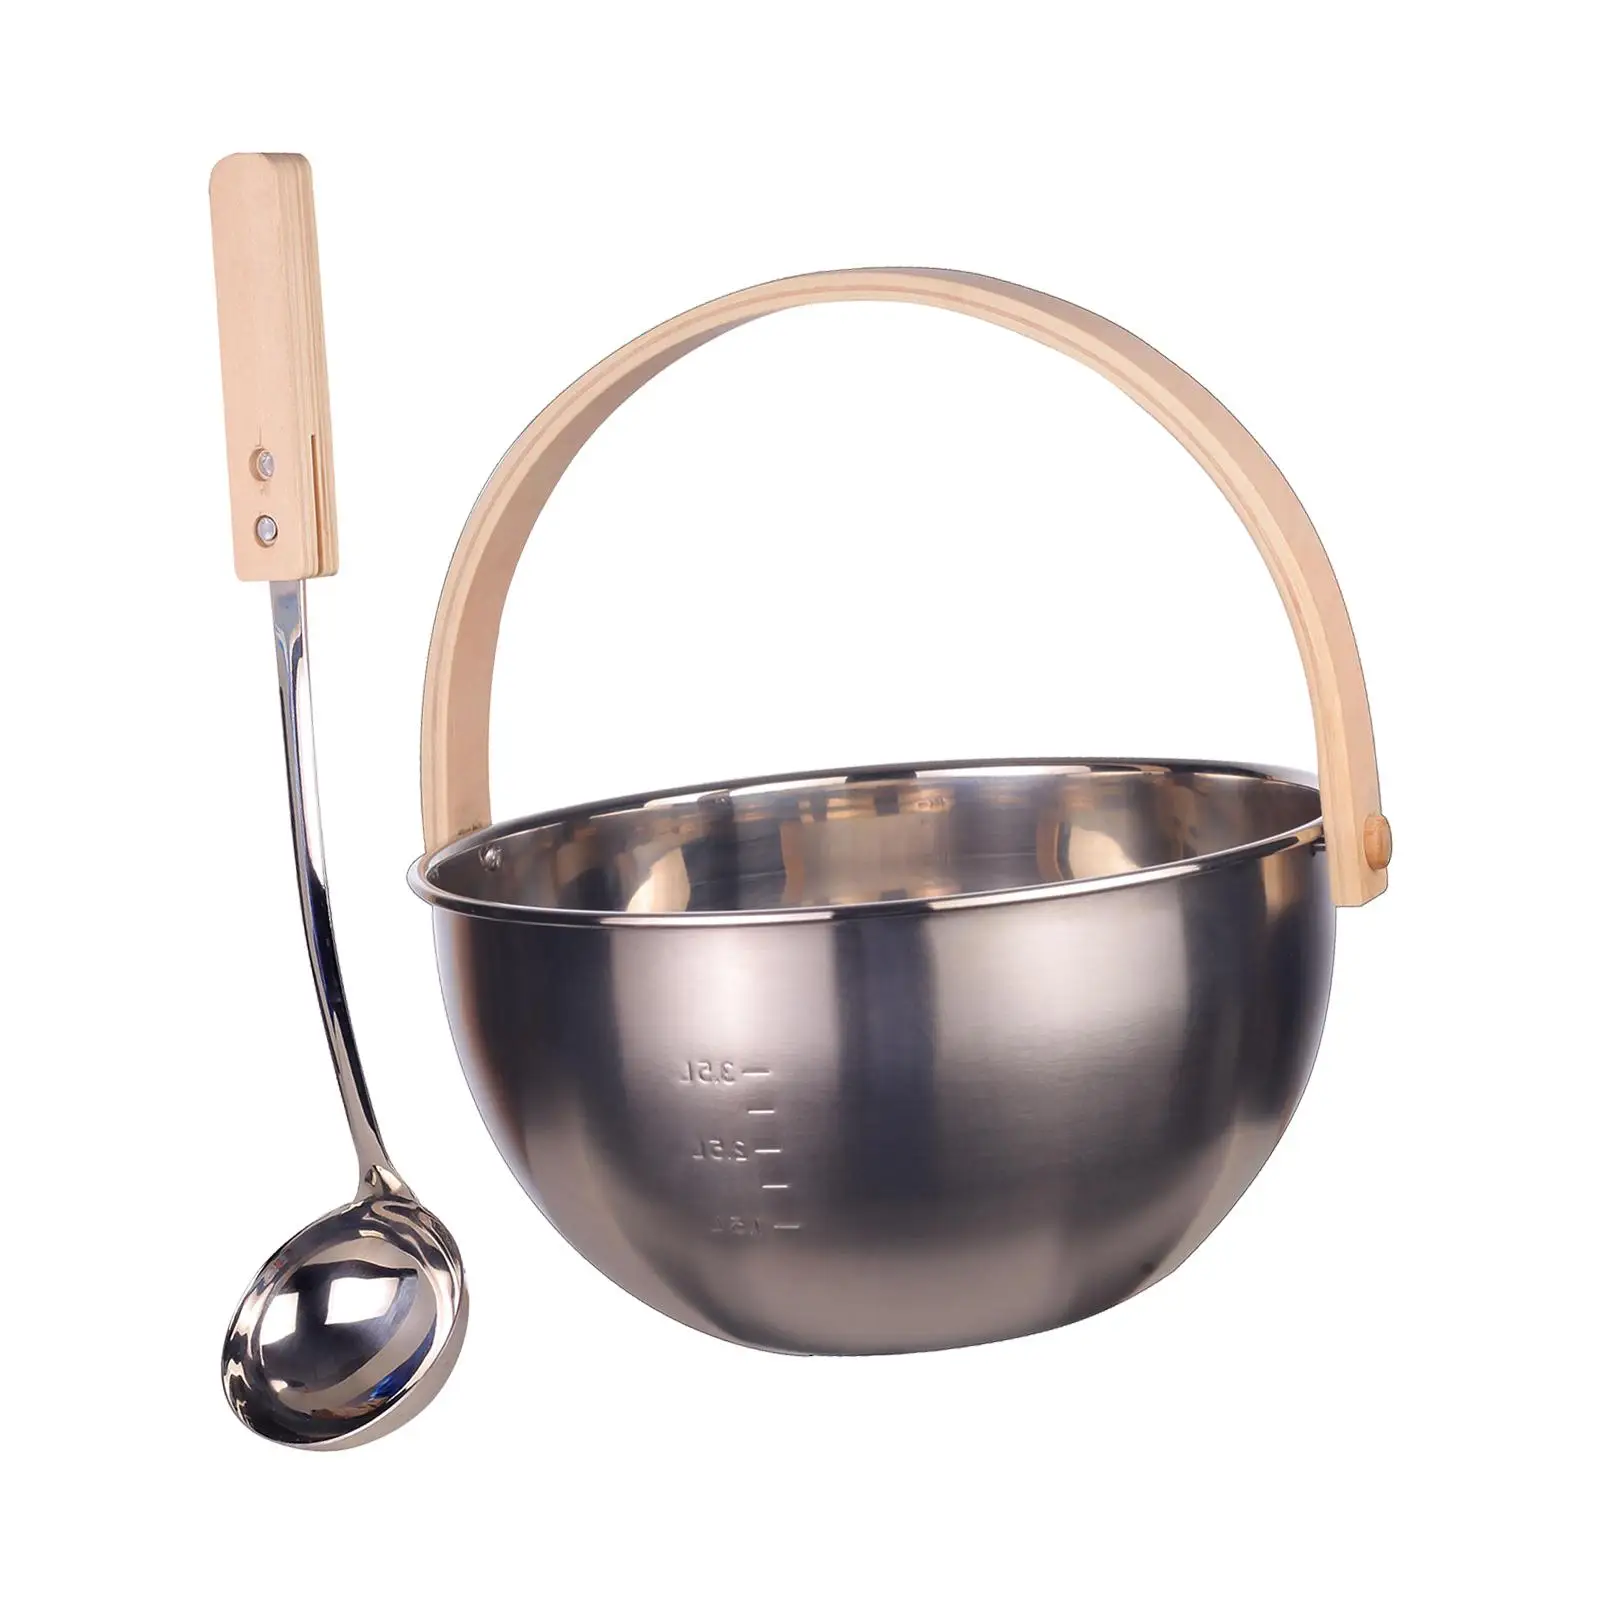 Sauna Stainless Steel Bucket and Ladle Set Wooden Handle Lightweight for Sauna Room